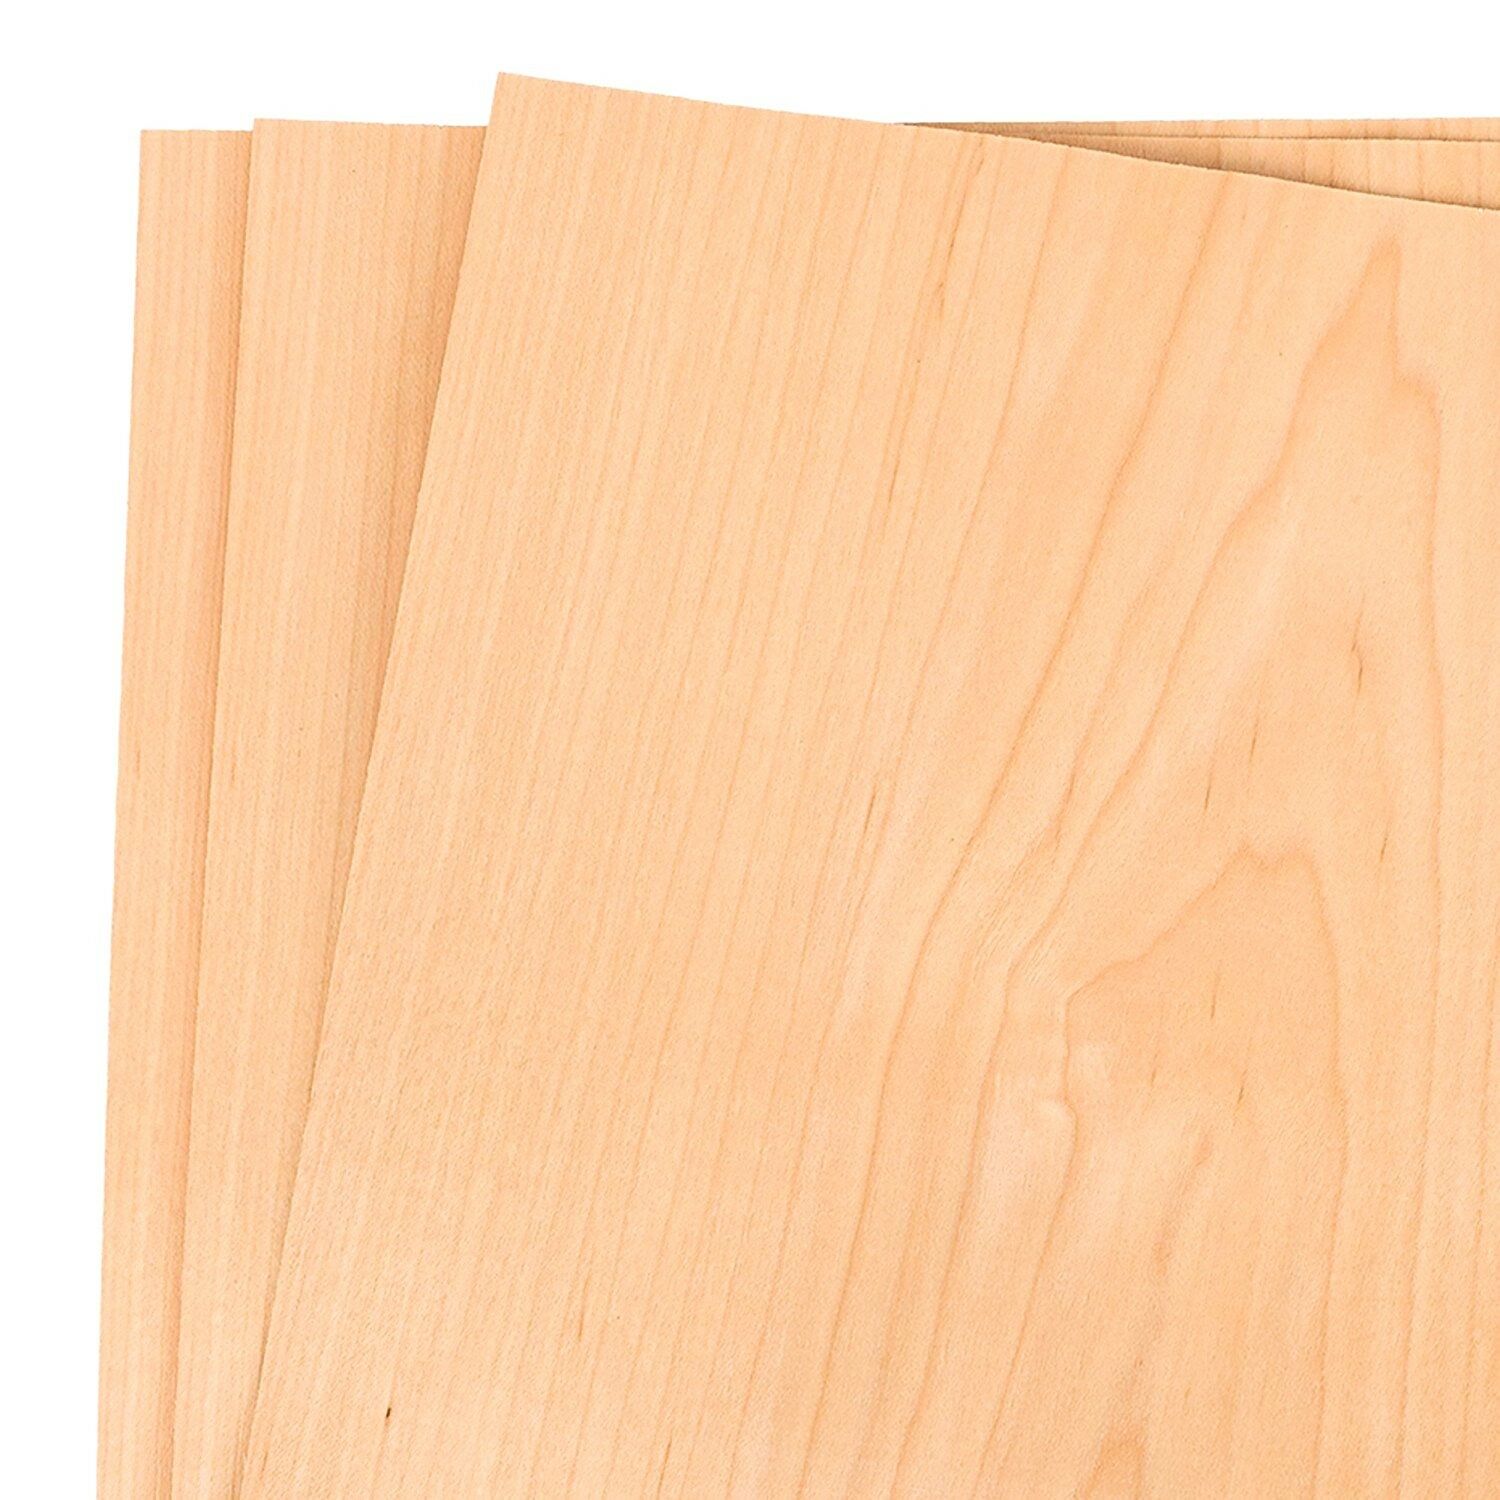 Maple Wood Veneer Raw/unbacked 12" X 12" (1' X 1') Pack Of 3 Sheets